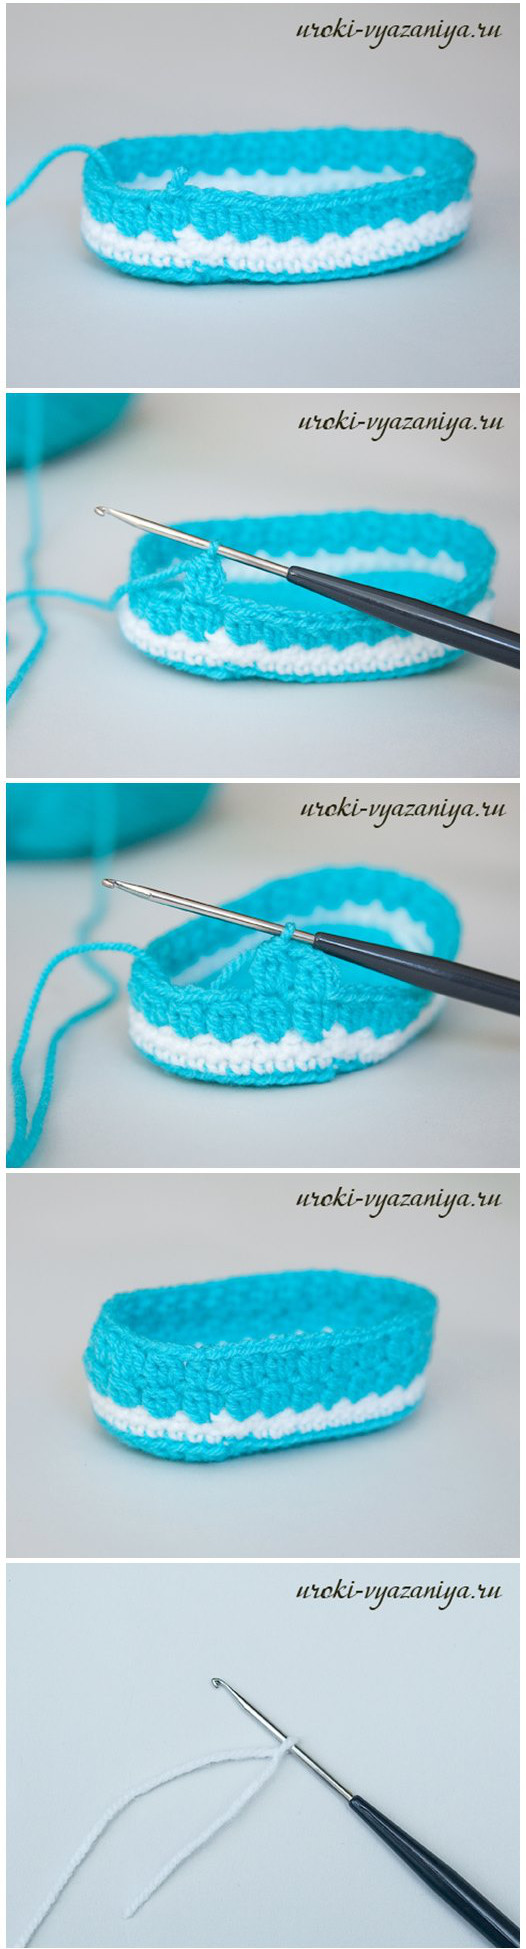 DIY Crocodile Stitch Baby Booties #Crochet #Baby #Booties